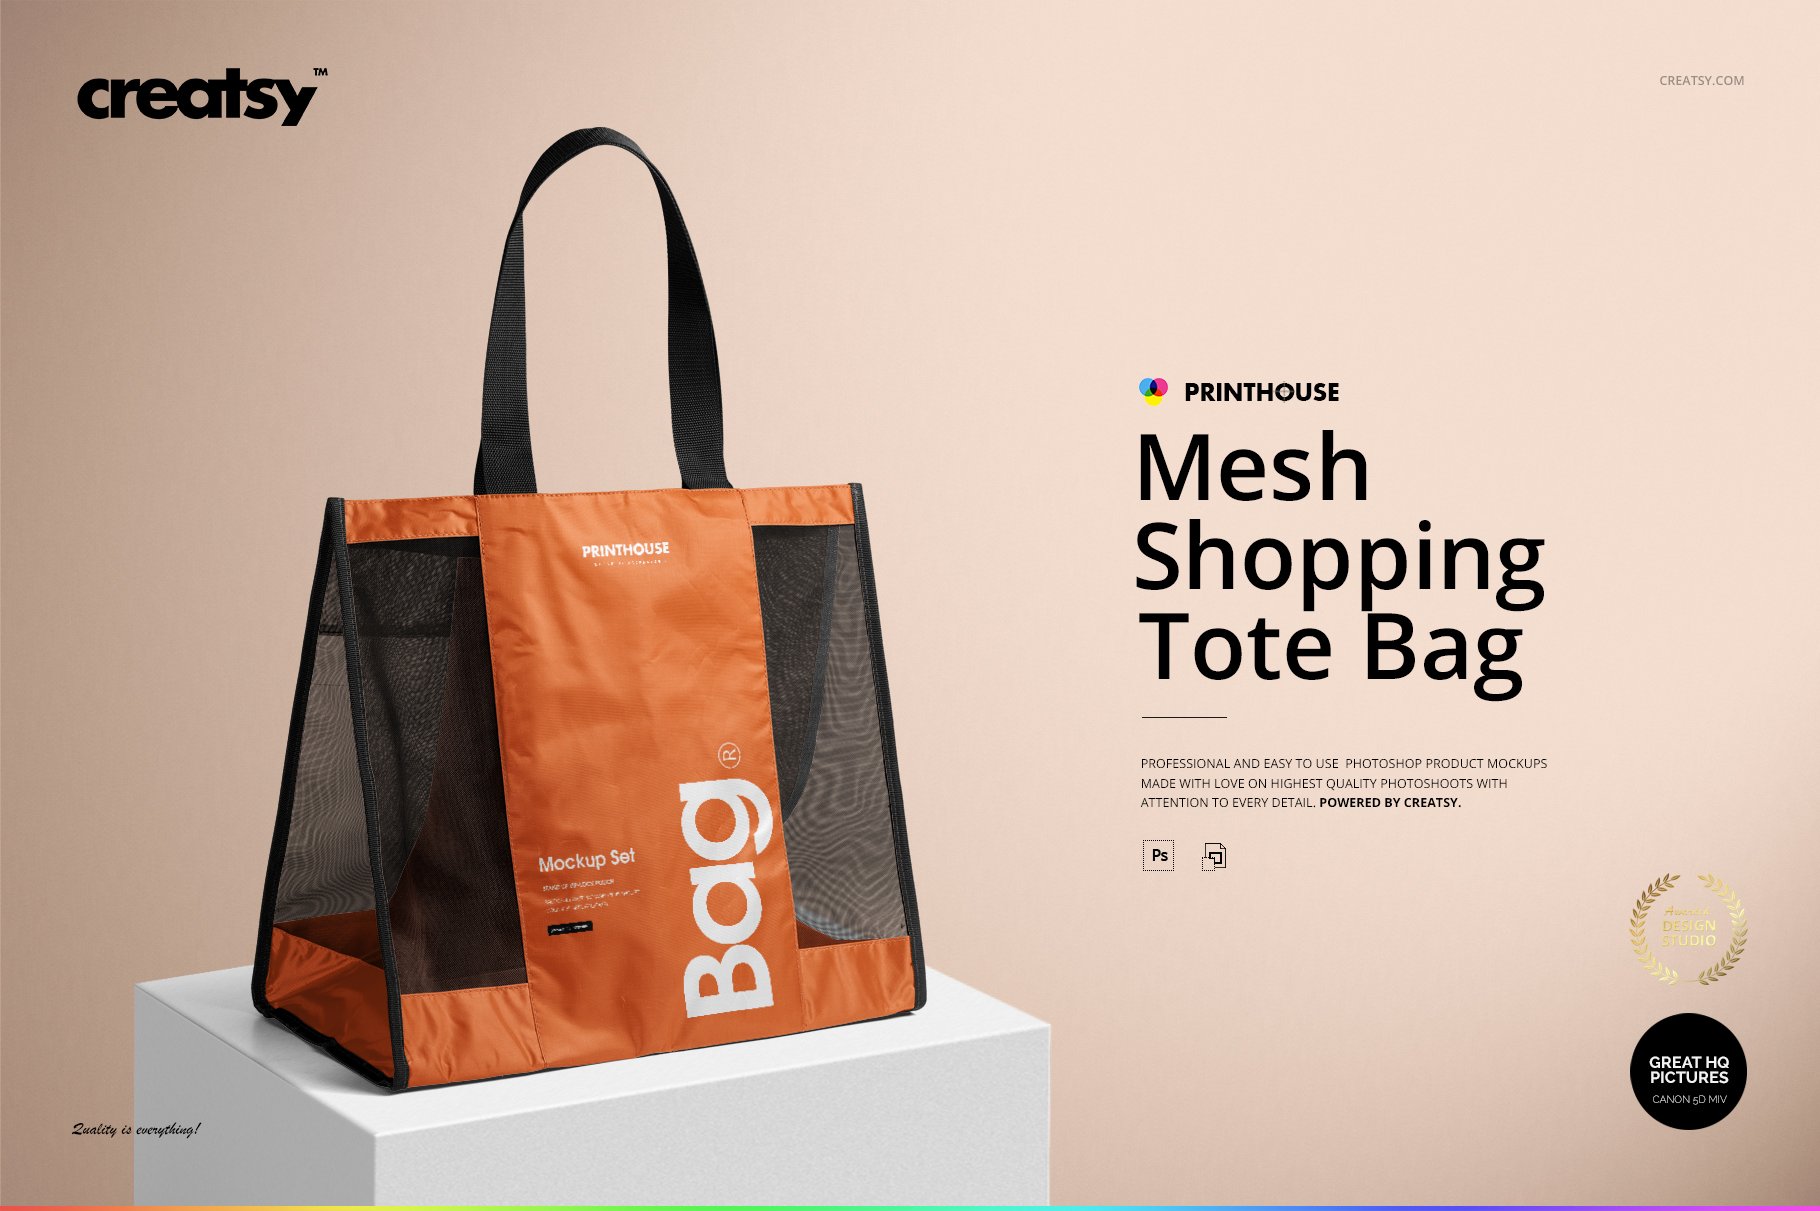 Mesh Shopping Tote Bag Mockup Set cover image.